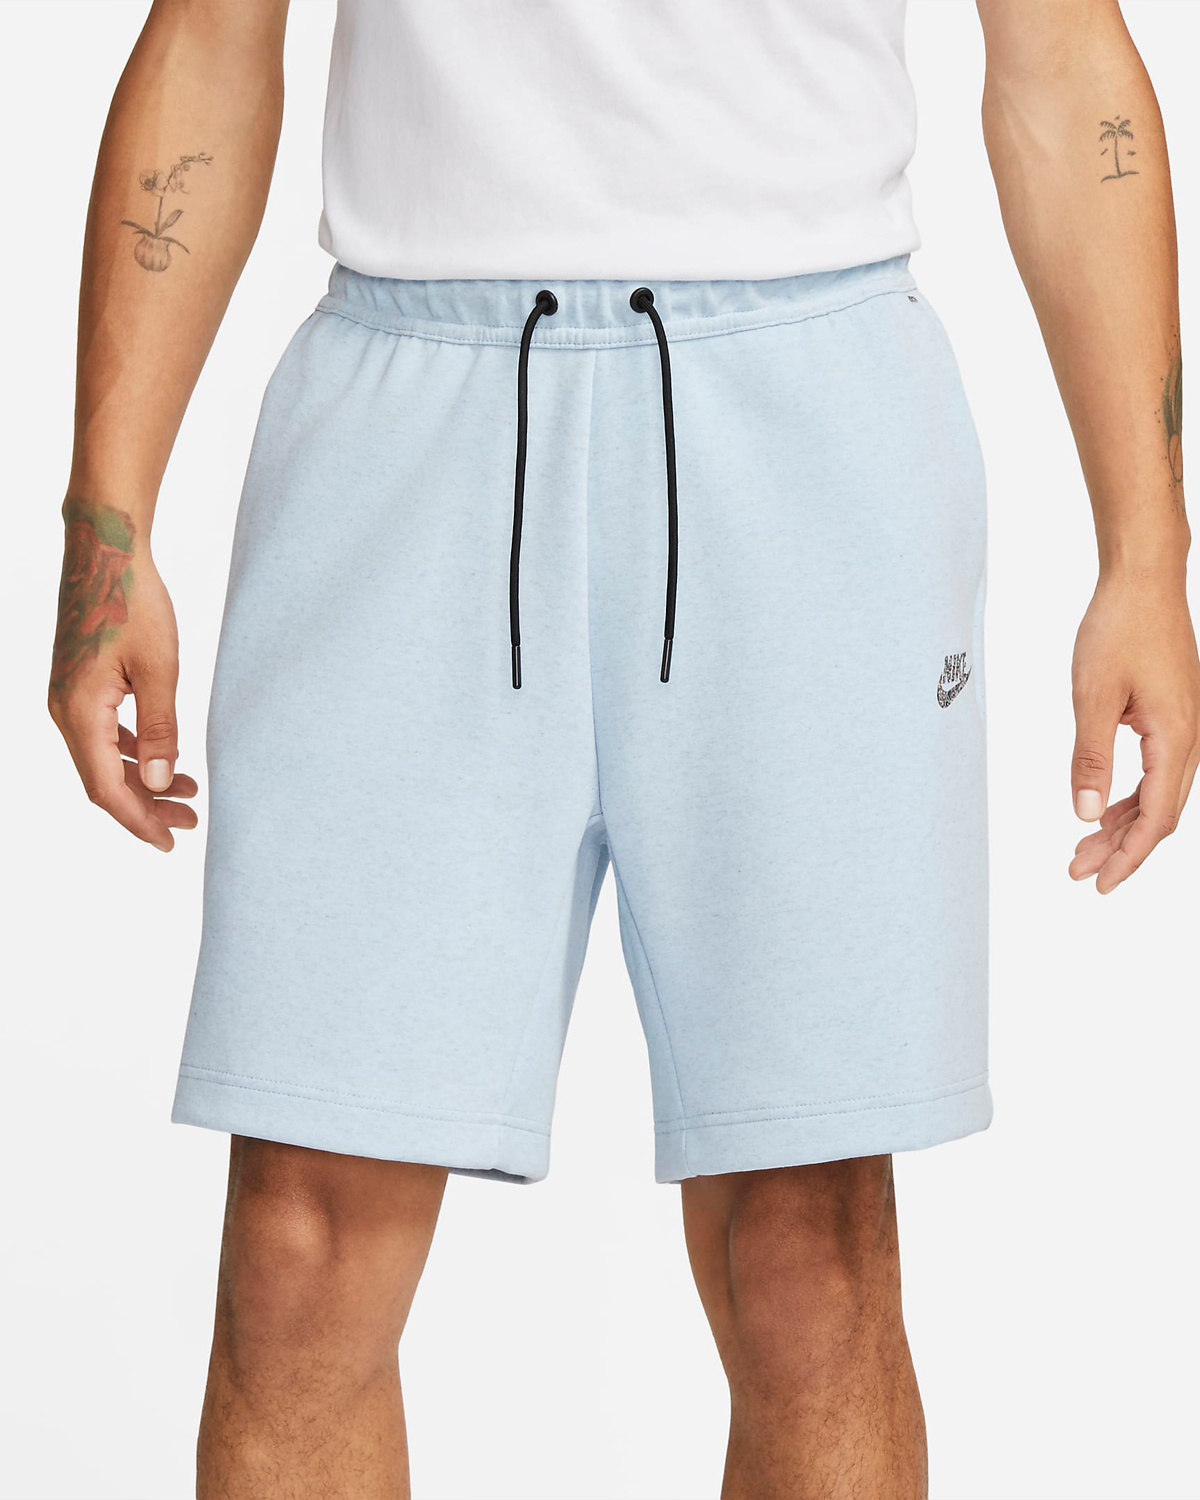 Nike-Tech-Fleece-Shorts-Celestine-Blue